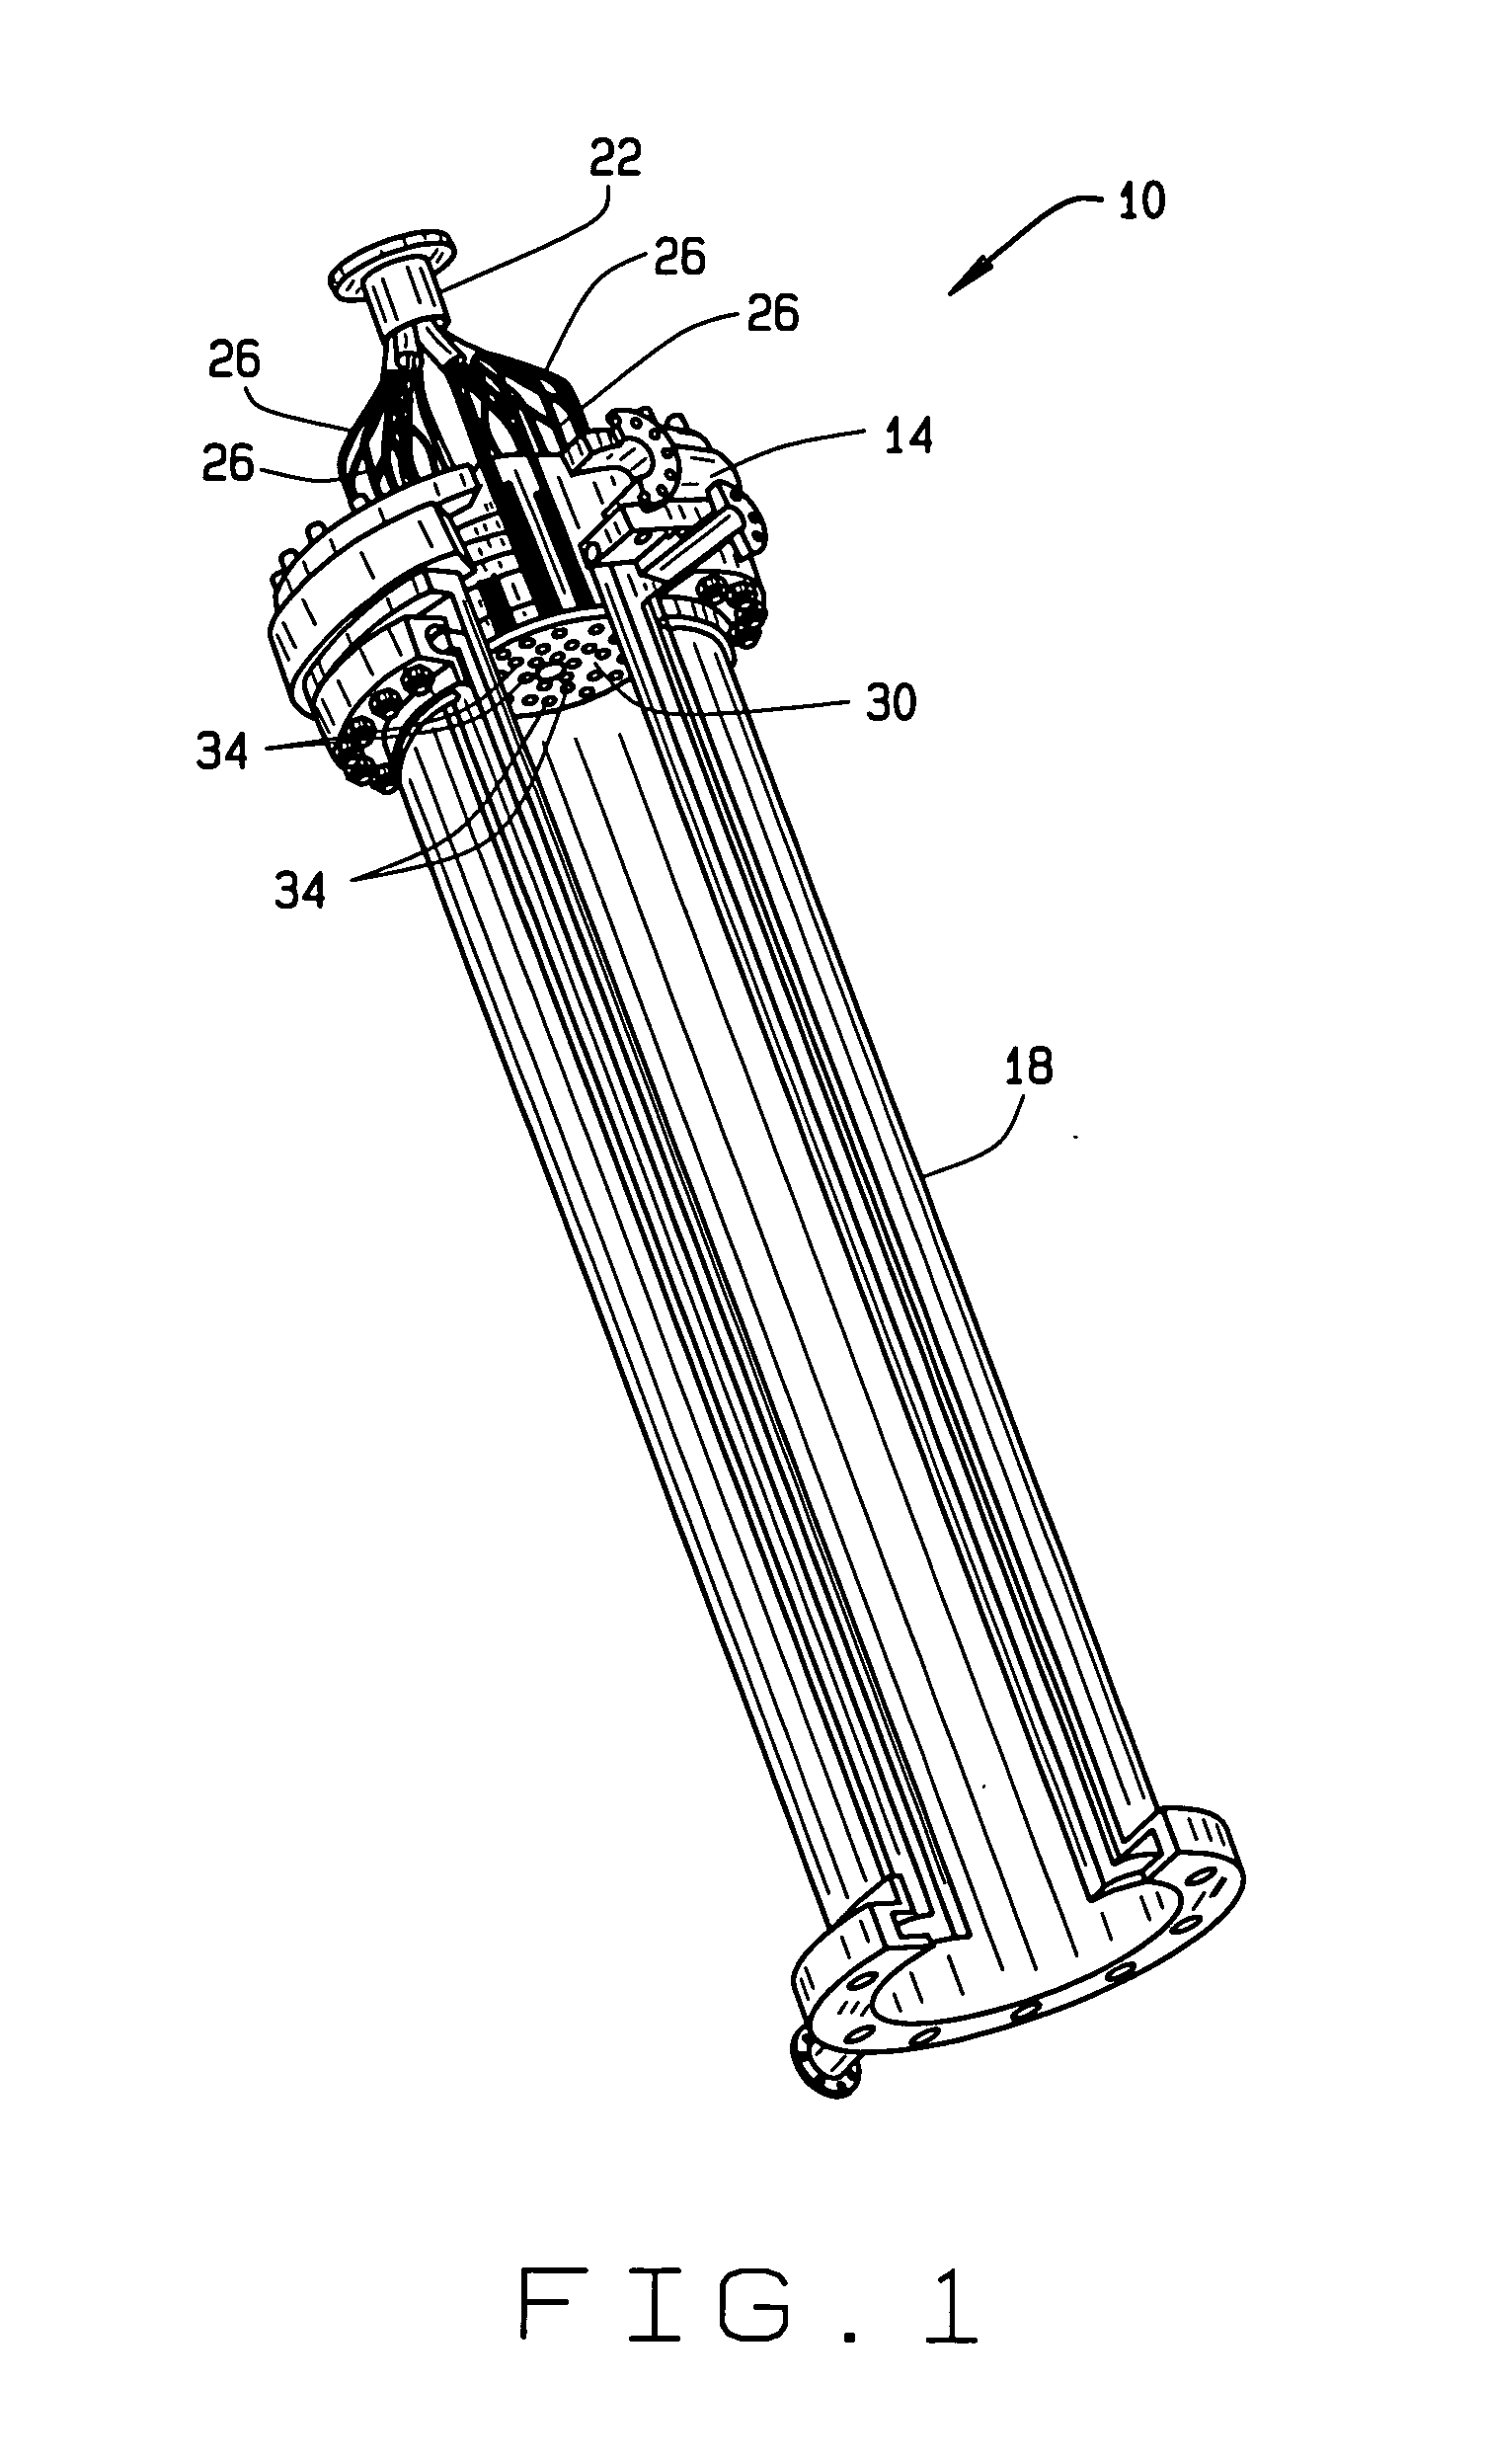 Gasifier injector